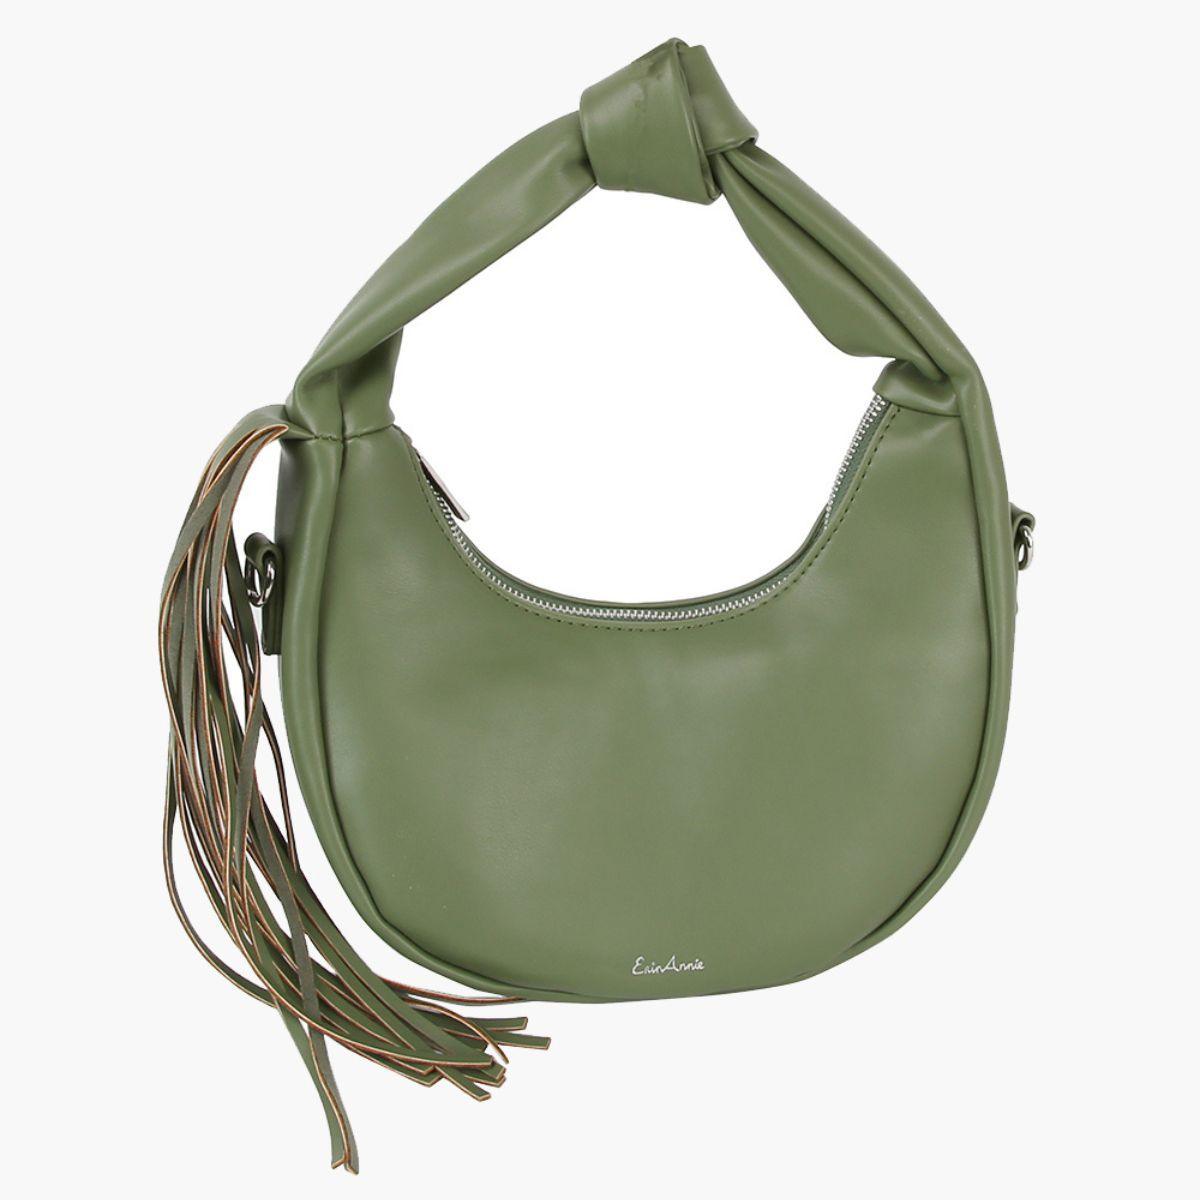 Get Noticed with a Stylish Green Fringe Shoulder Bag for Women